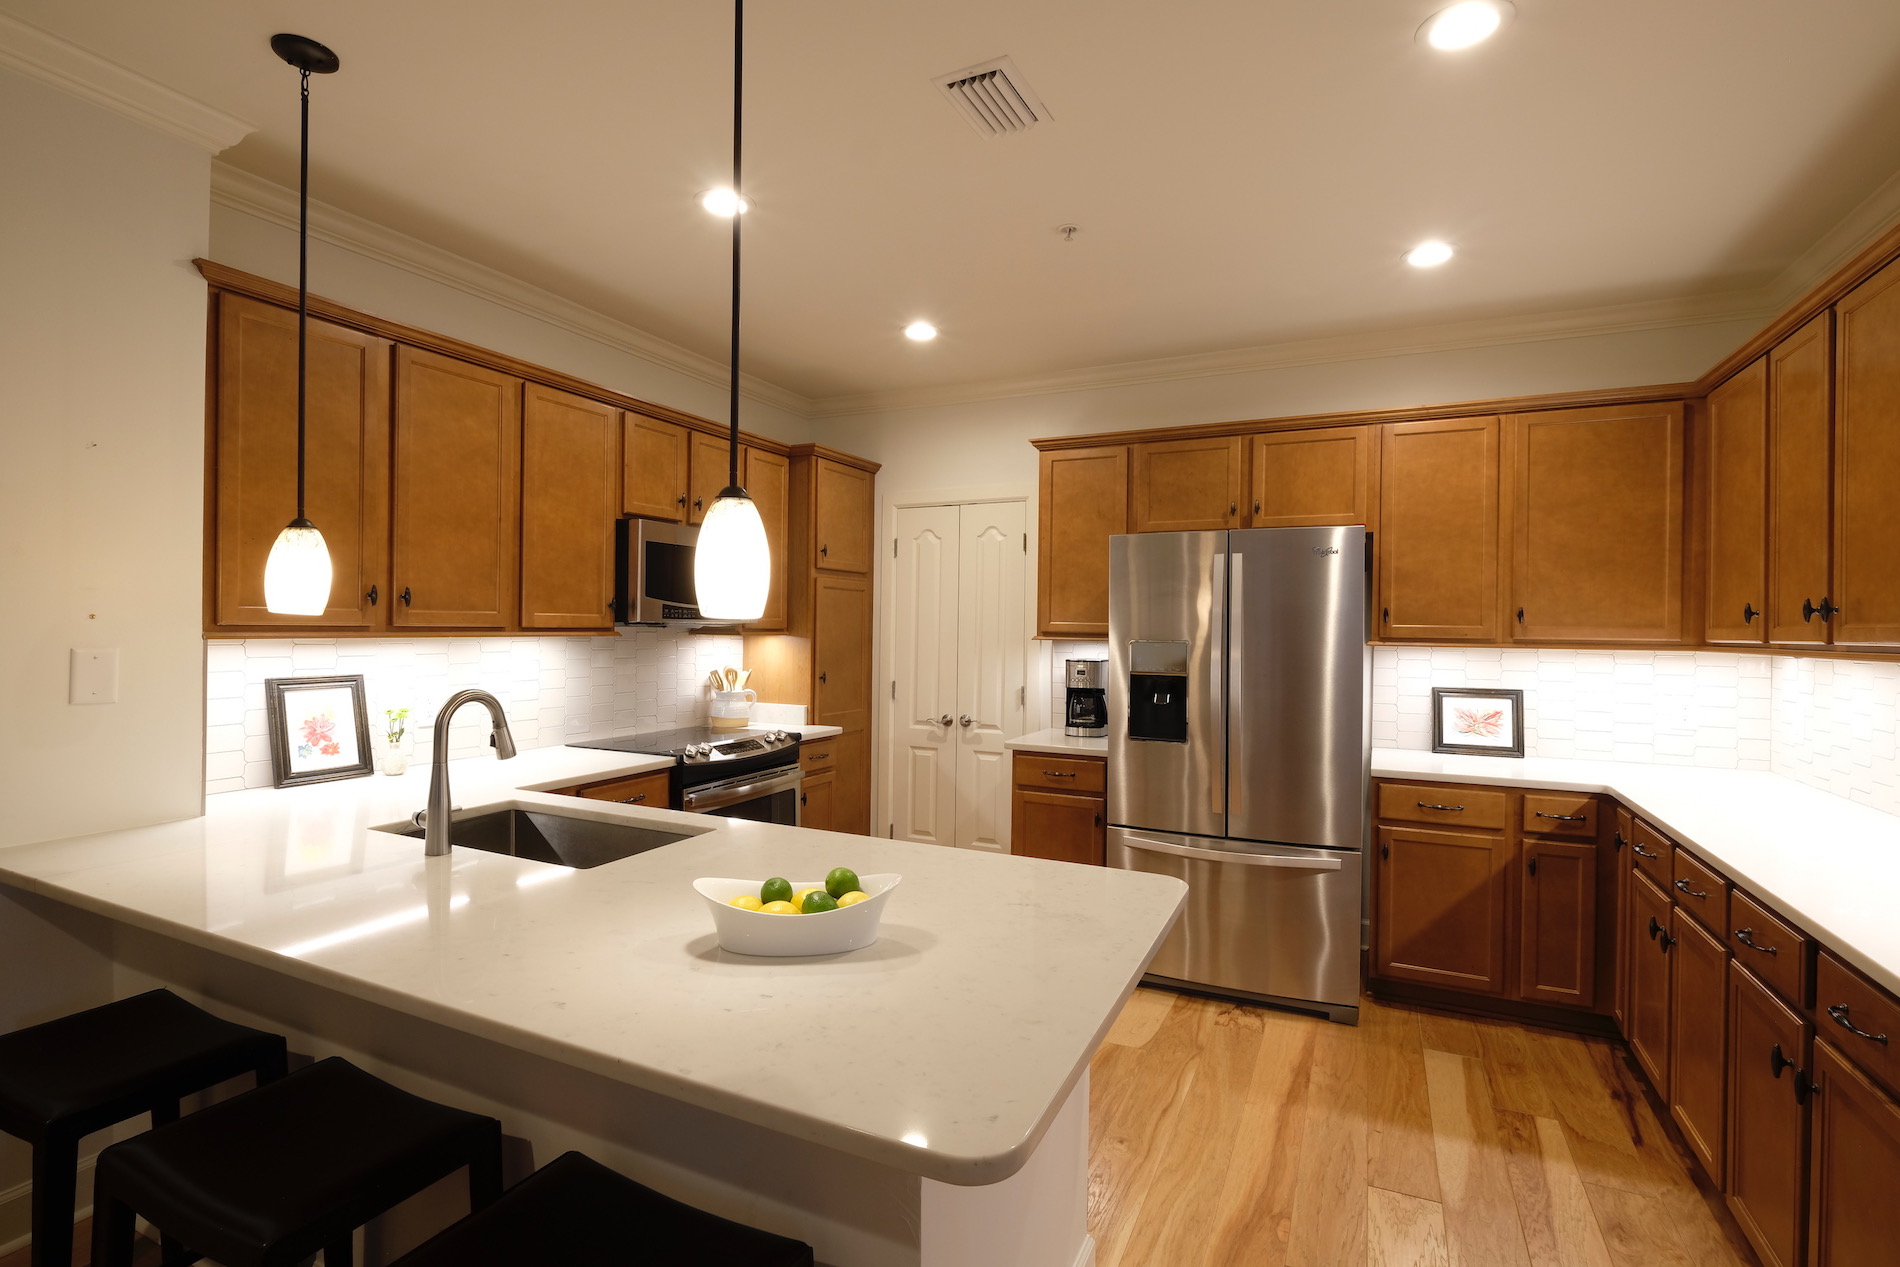 Renovated kitchen, white quartz counters, stainless appliances, light pendant